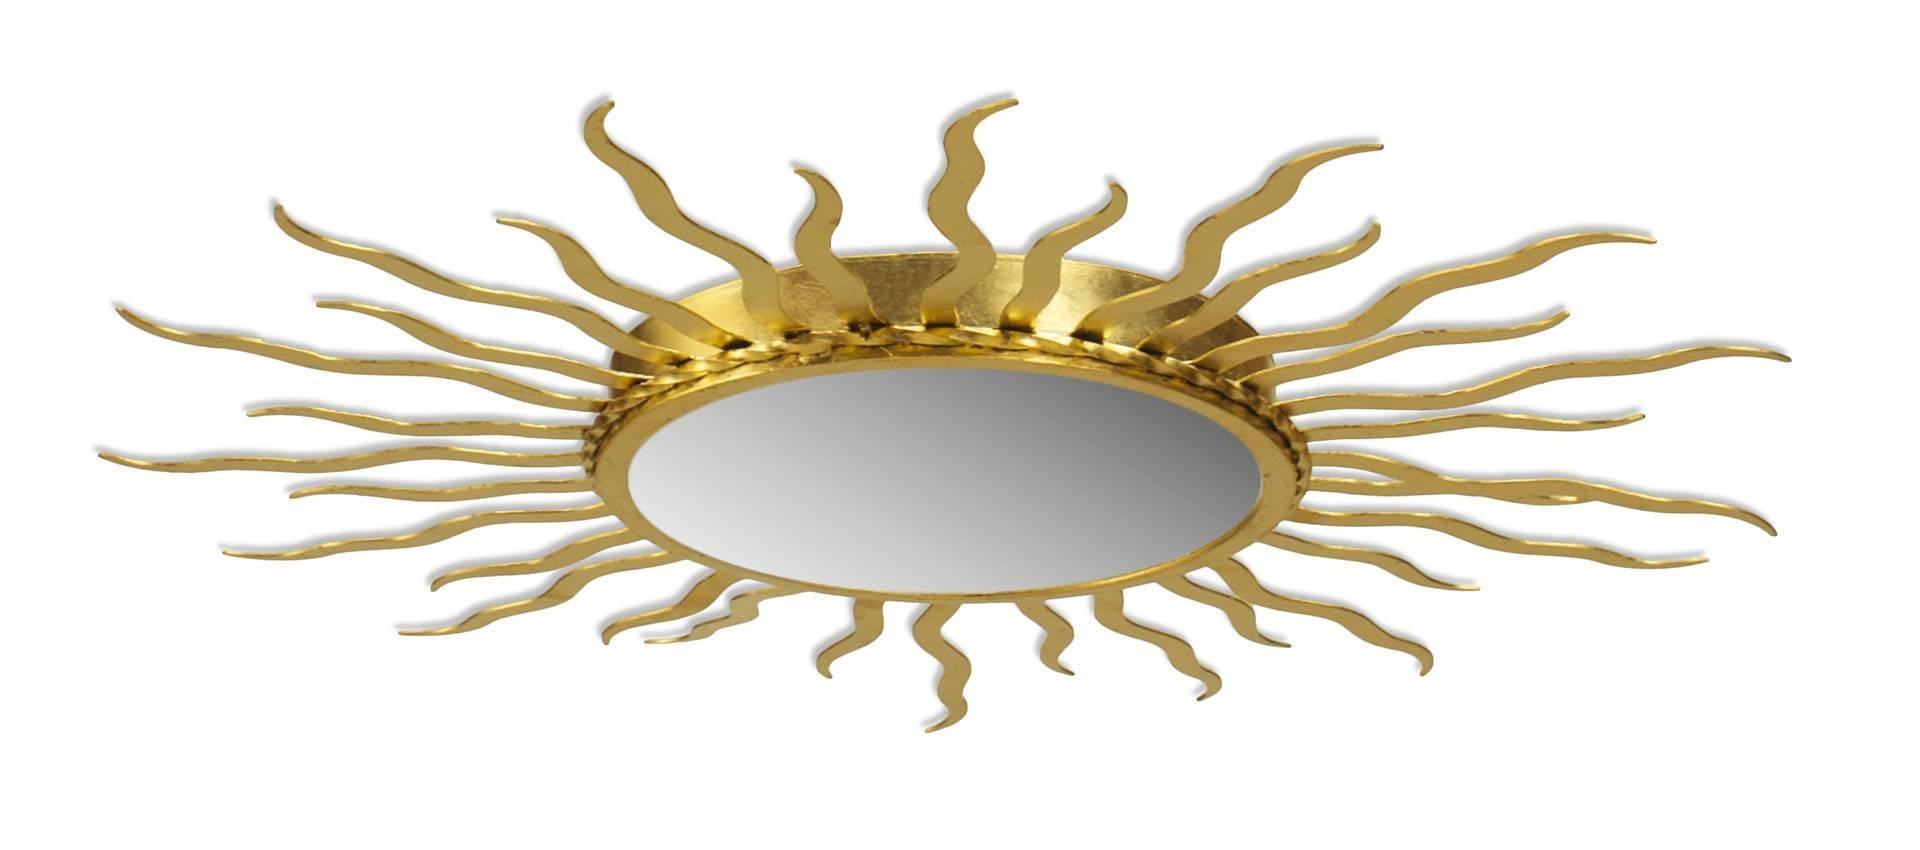 20th Century Italian Art Moderne Style (Modern) Gilt Metal Sunburst Form Wall Mirrors For Sale